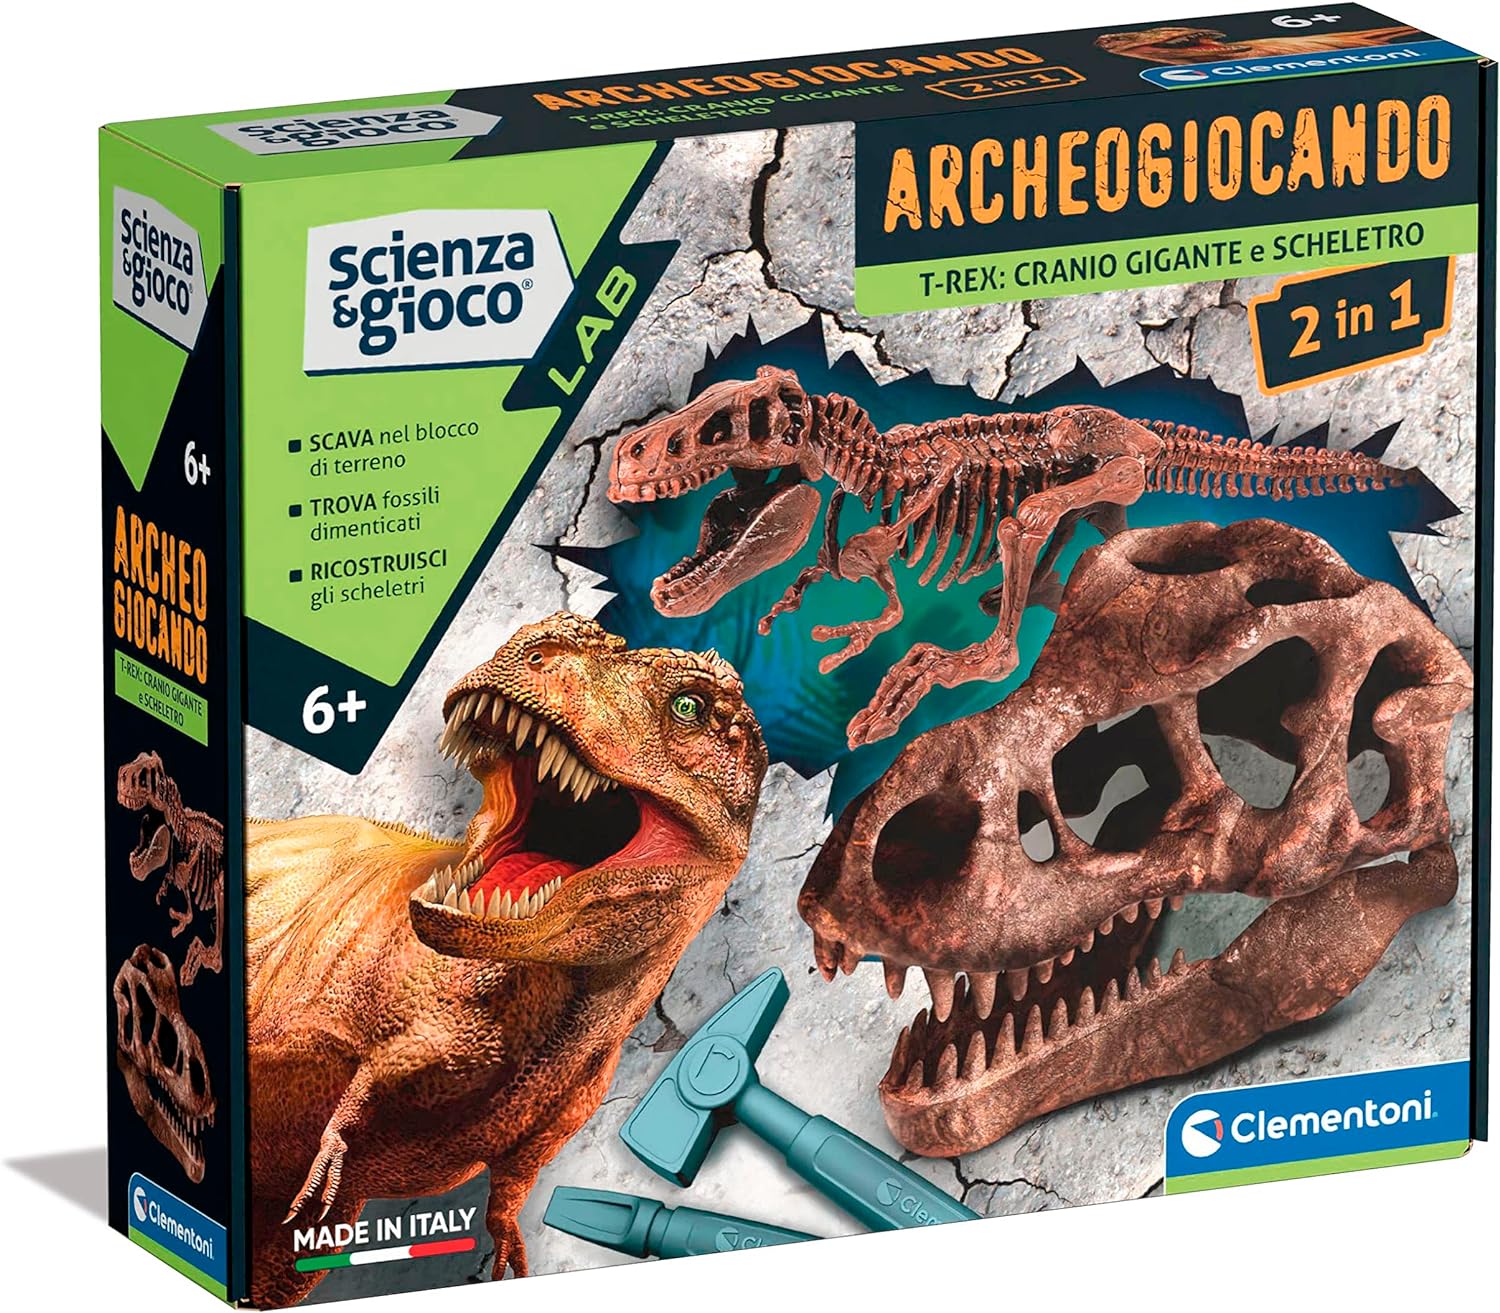 Archeogiocando cranio gigante e scheletro T-Rex